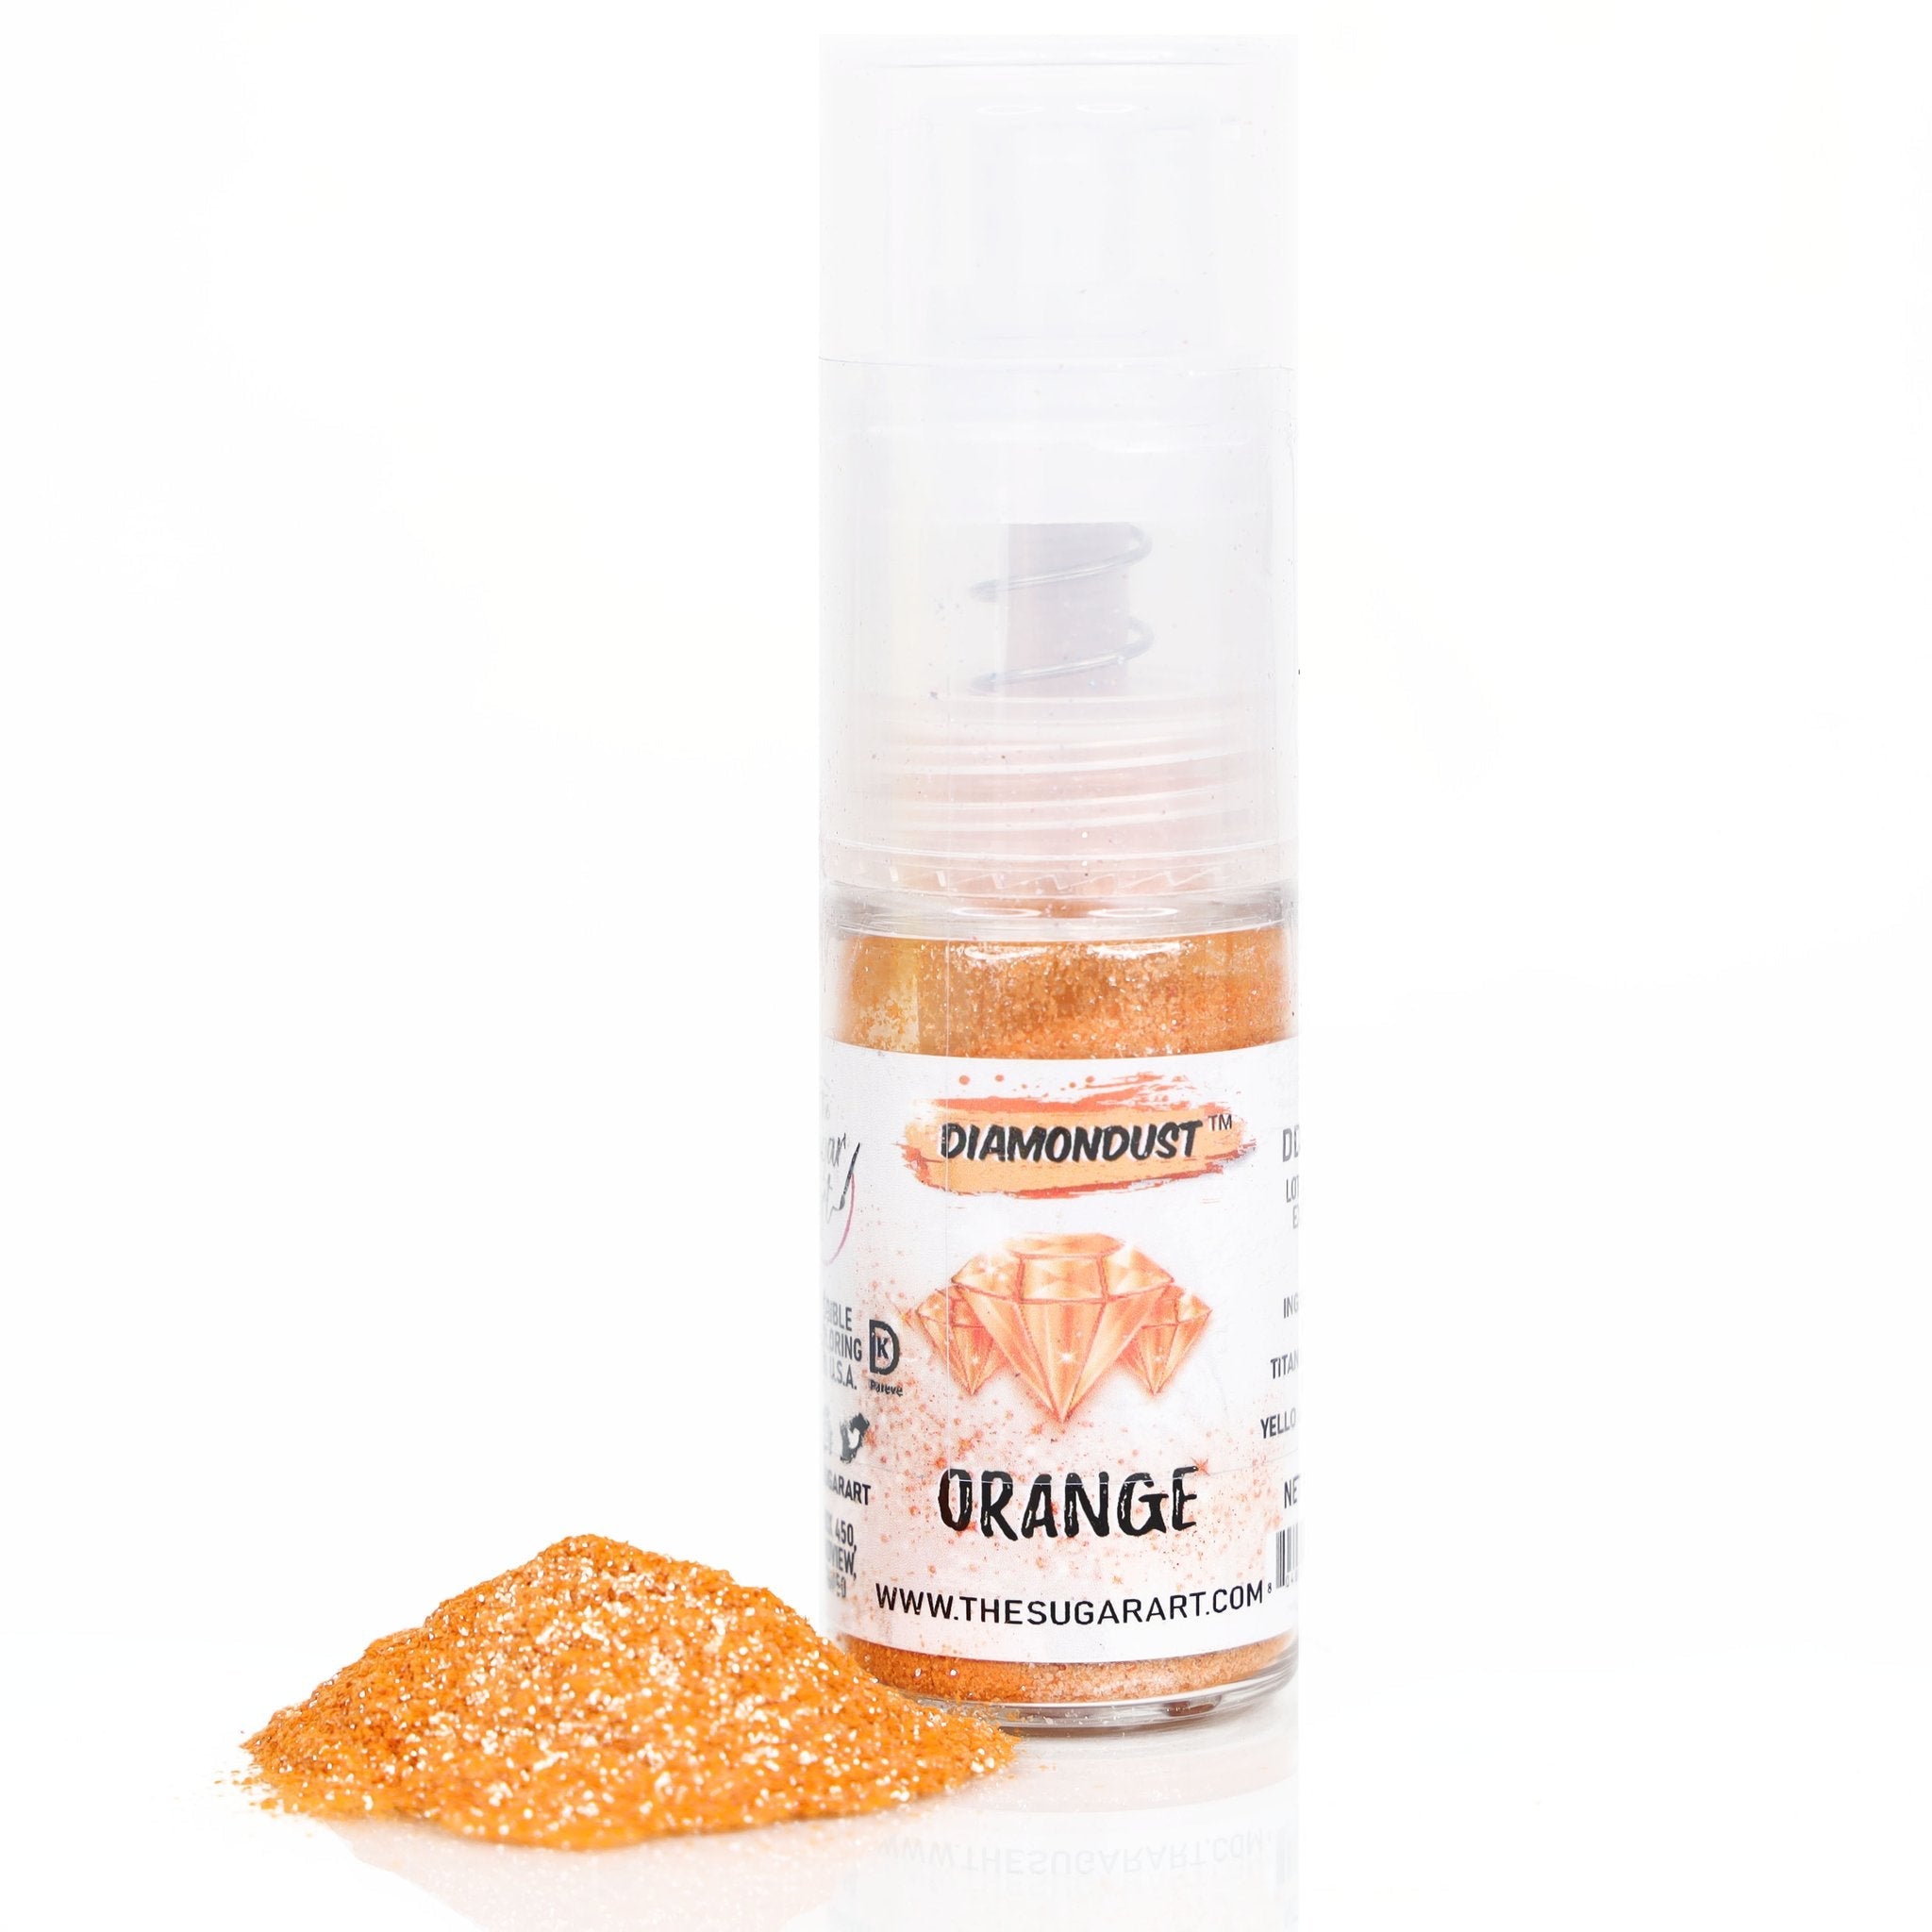 Orange DiamonDust Edible Glitter